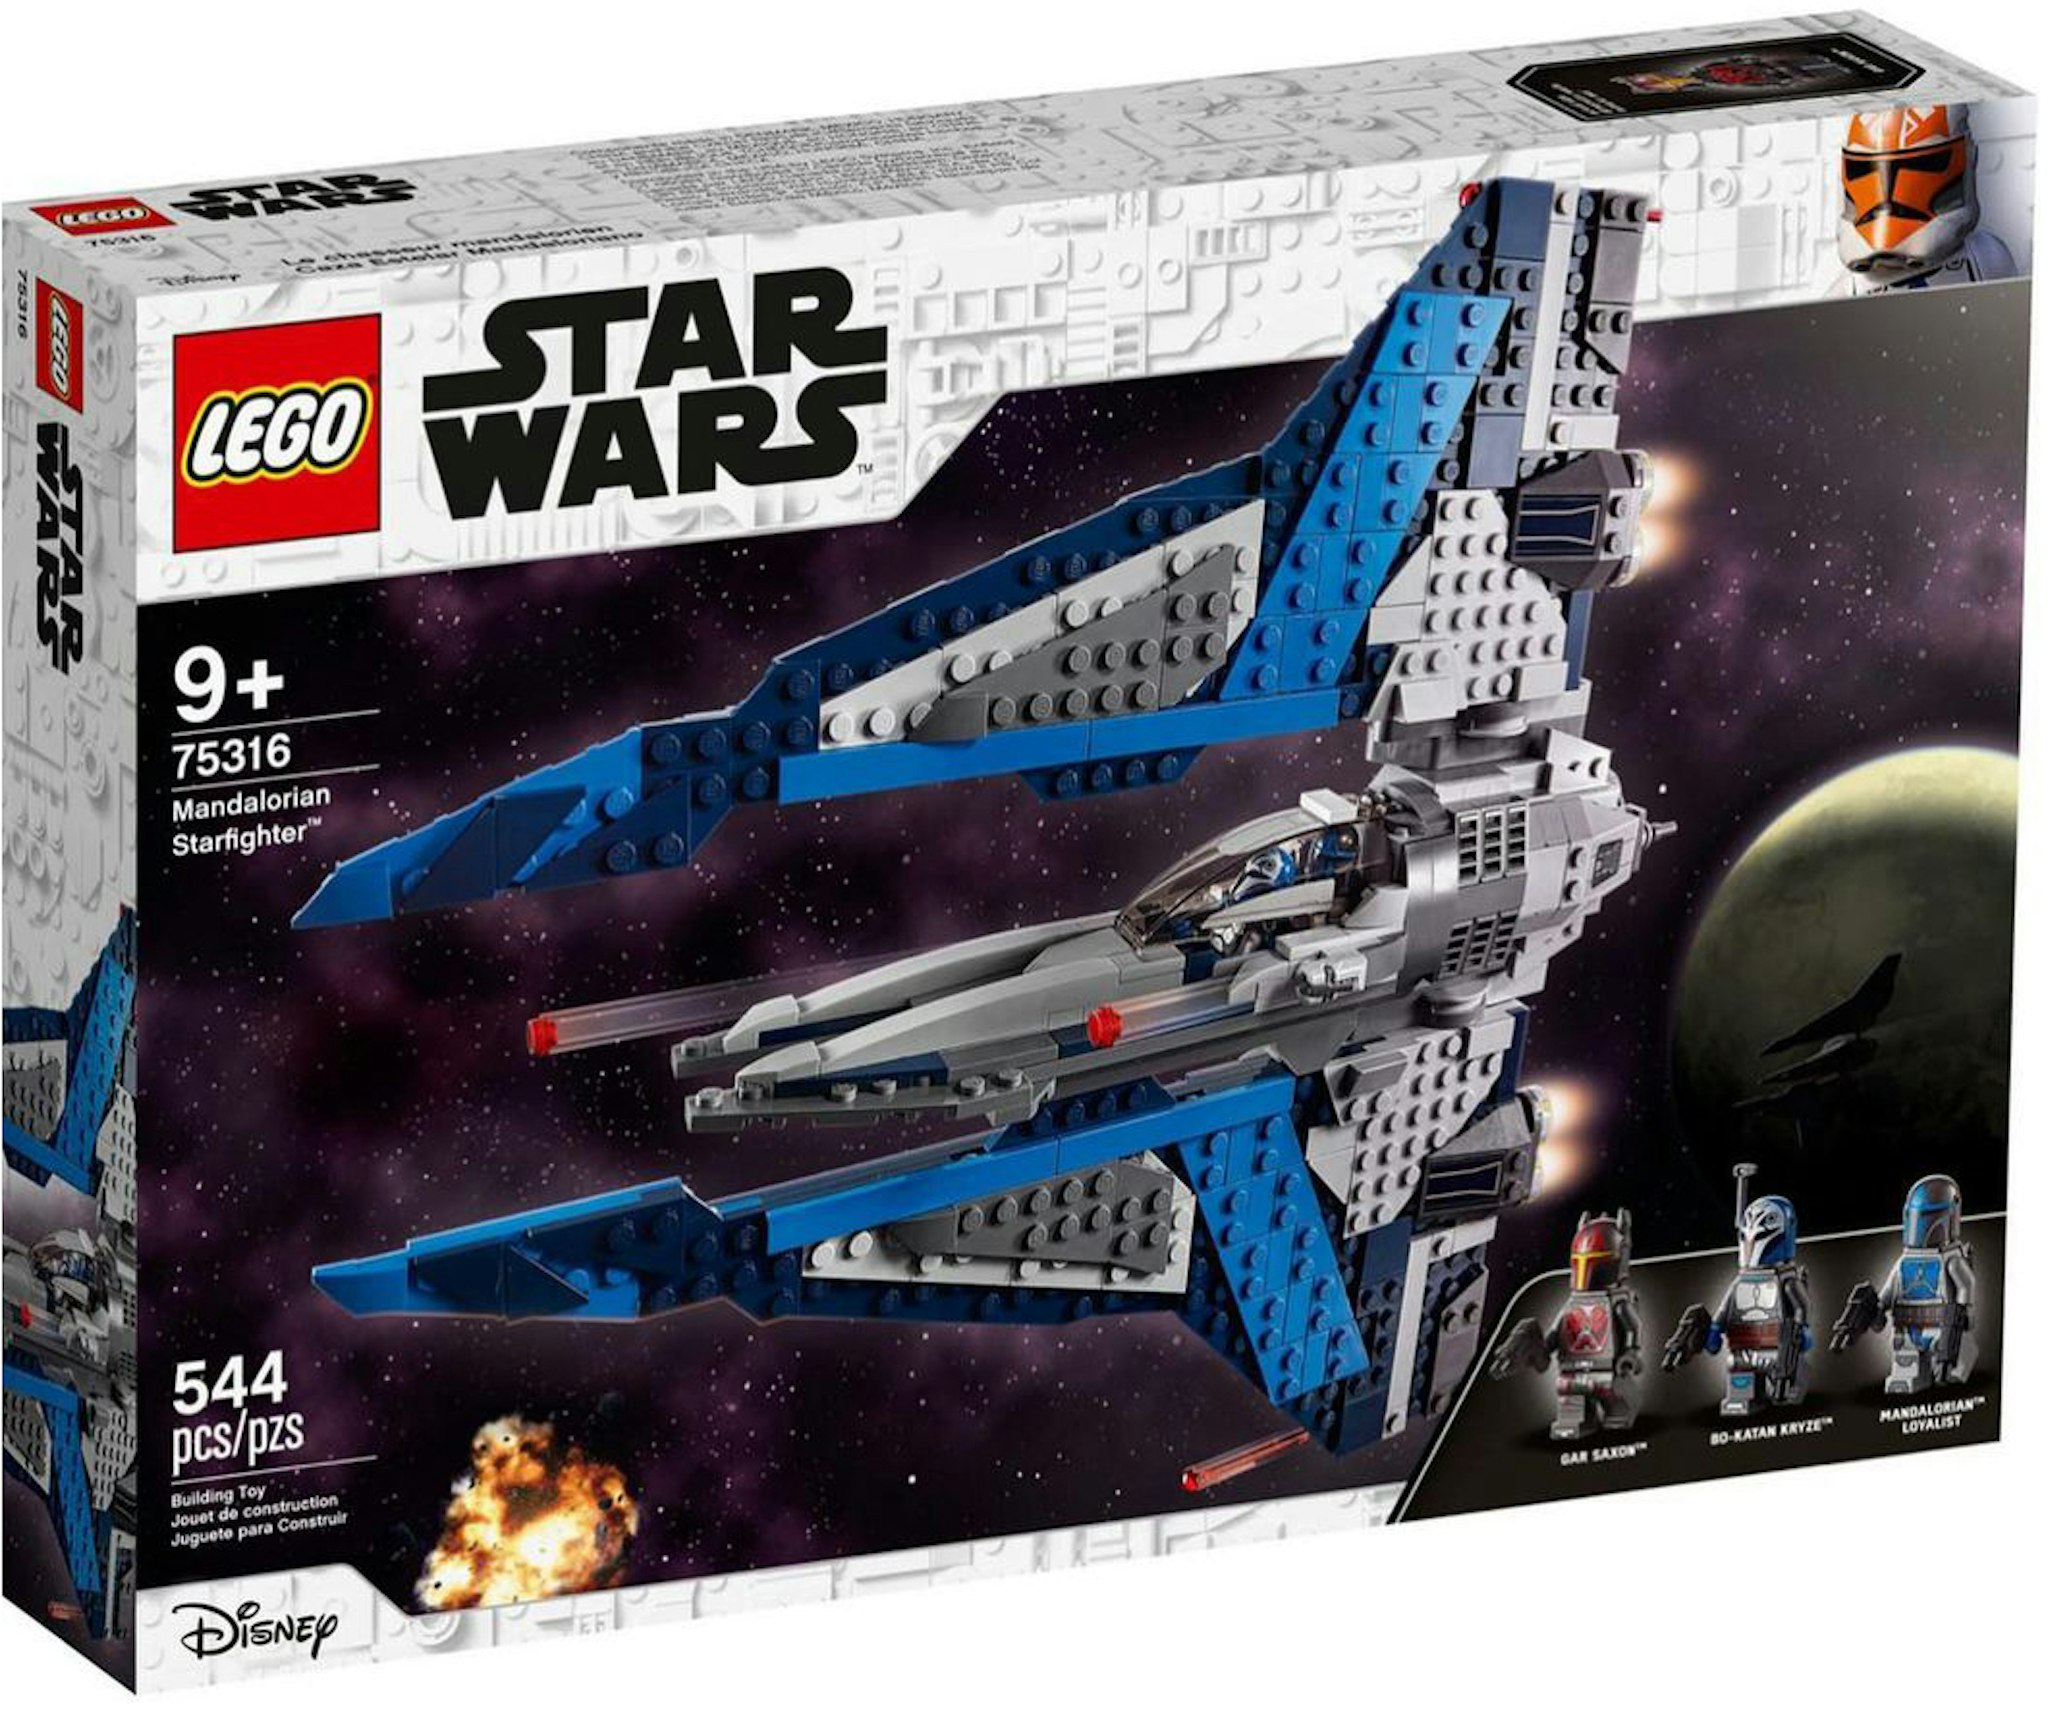 Demokrati nitrogen barbering LEGO Star Wars Mandalorian Starfighter Set 75316 - FW21 - US